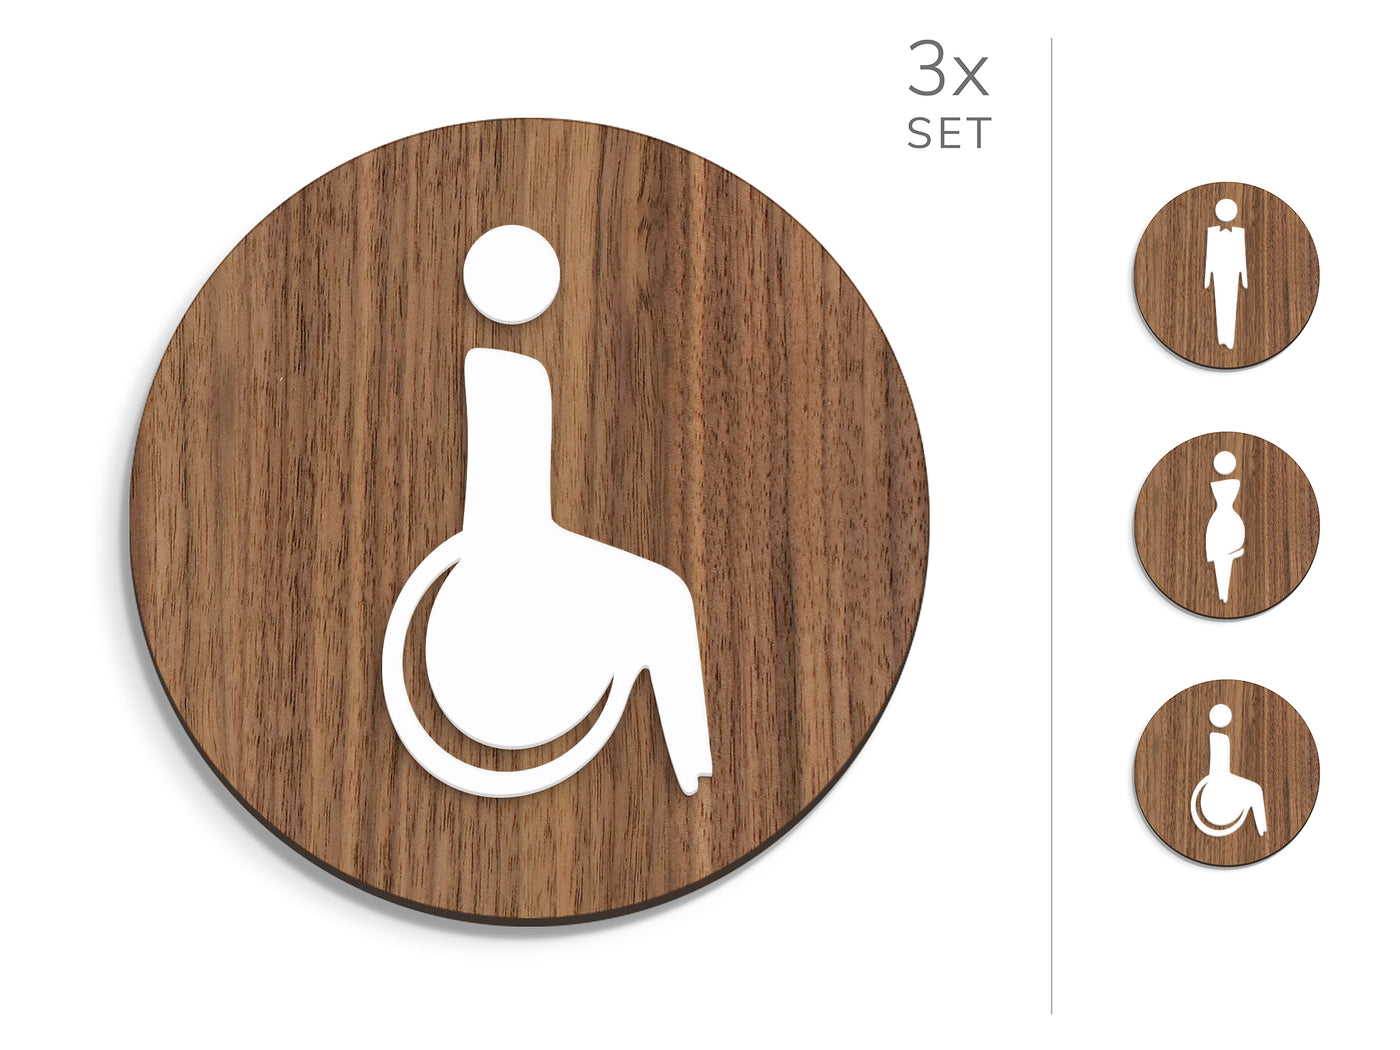 Elegant, 3x Base Rotonda - Set targhe per bagno, segnaletica servizi igienici - Uomo, Donna, Disabili